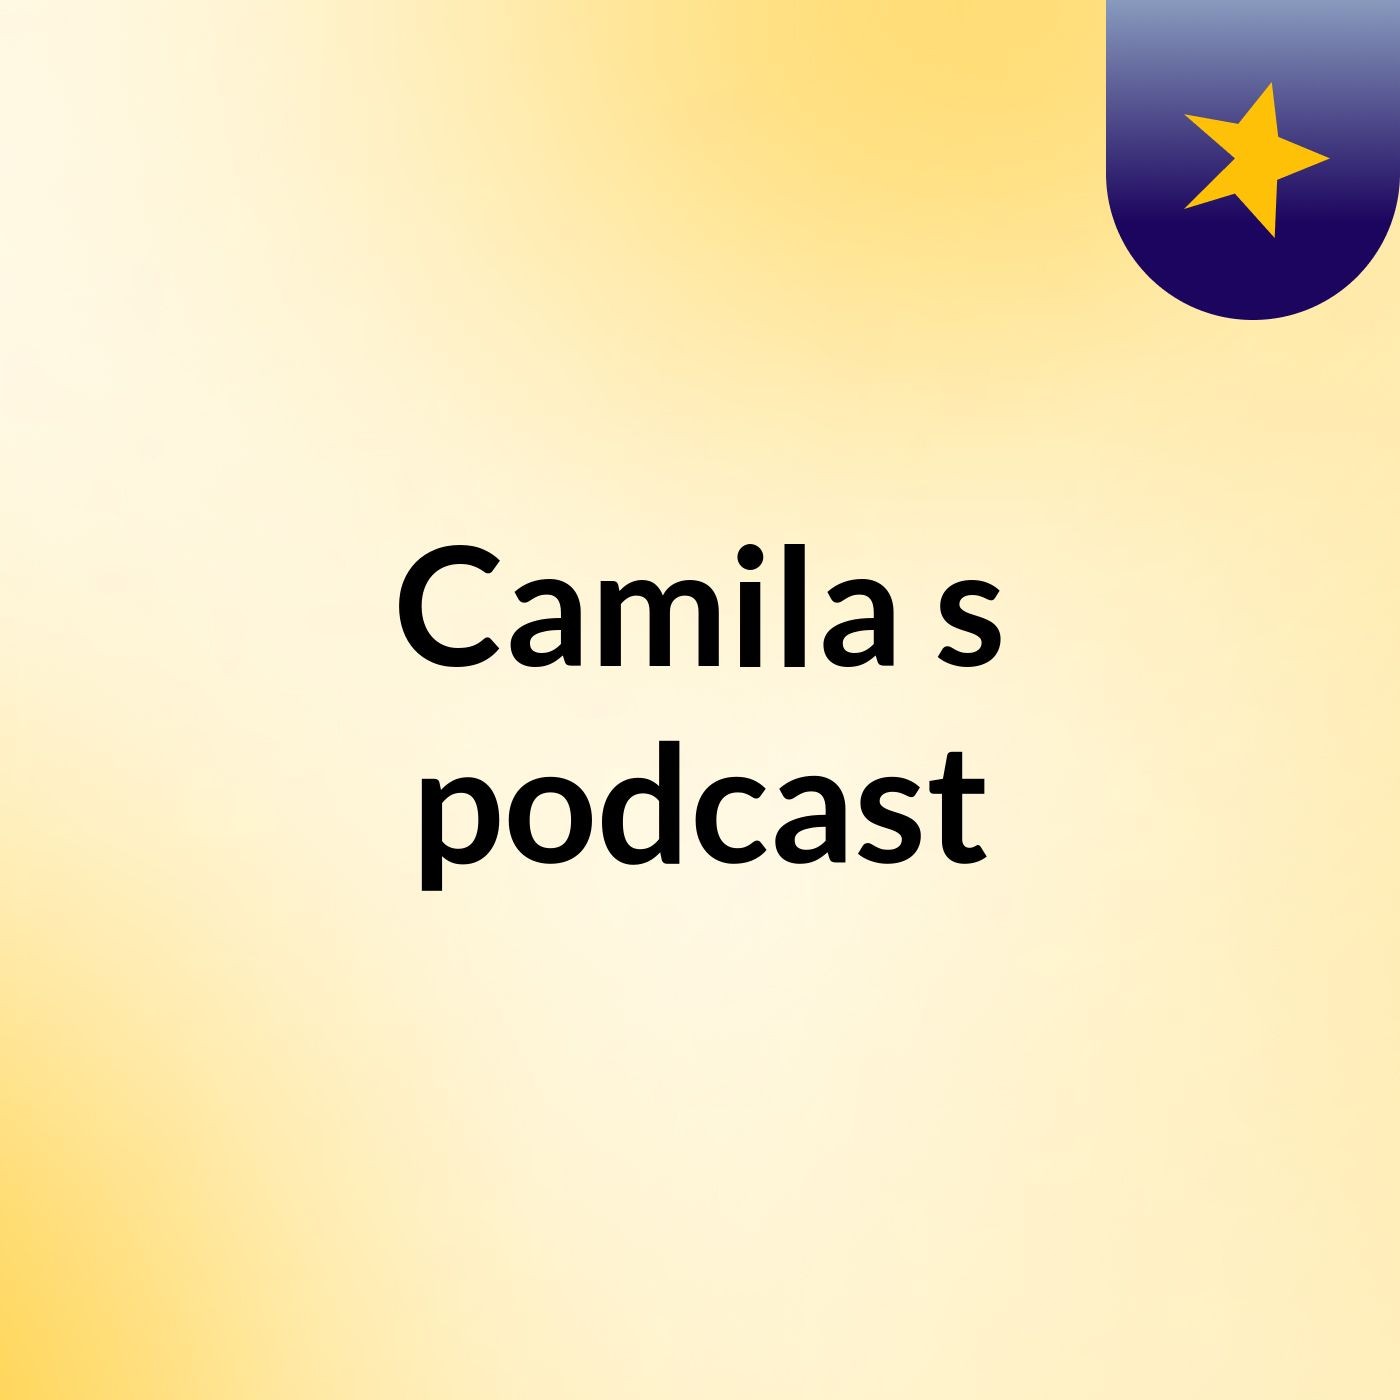 Camila's podcast